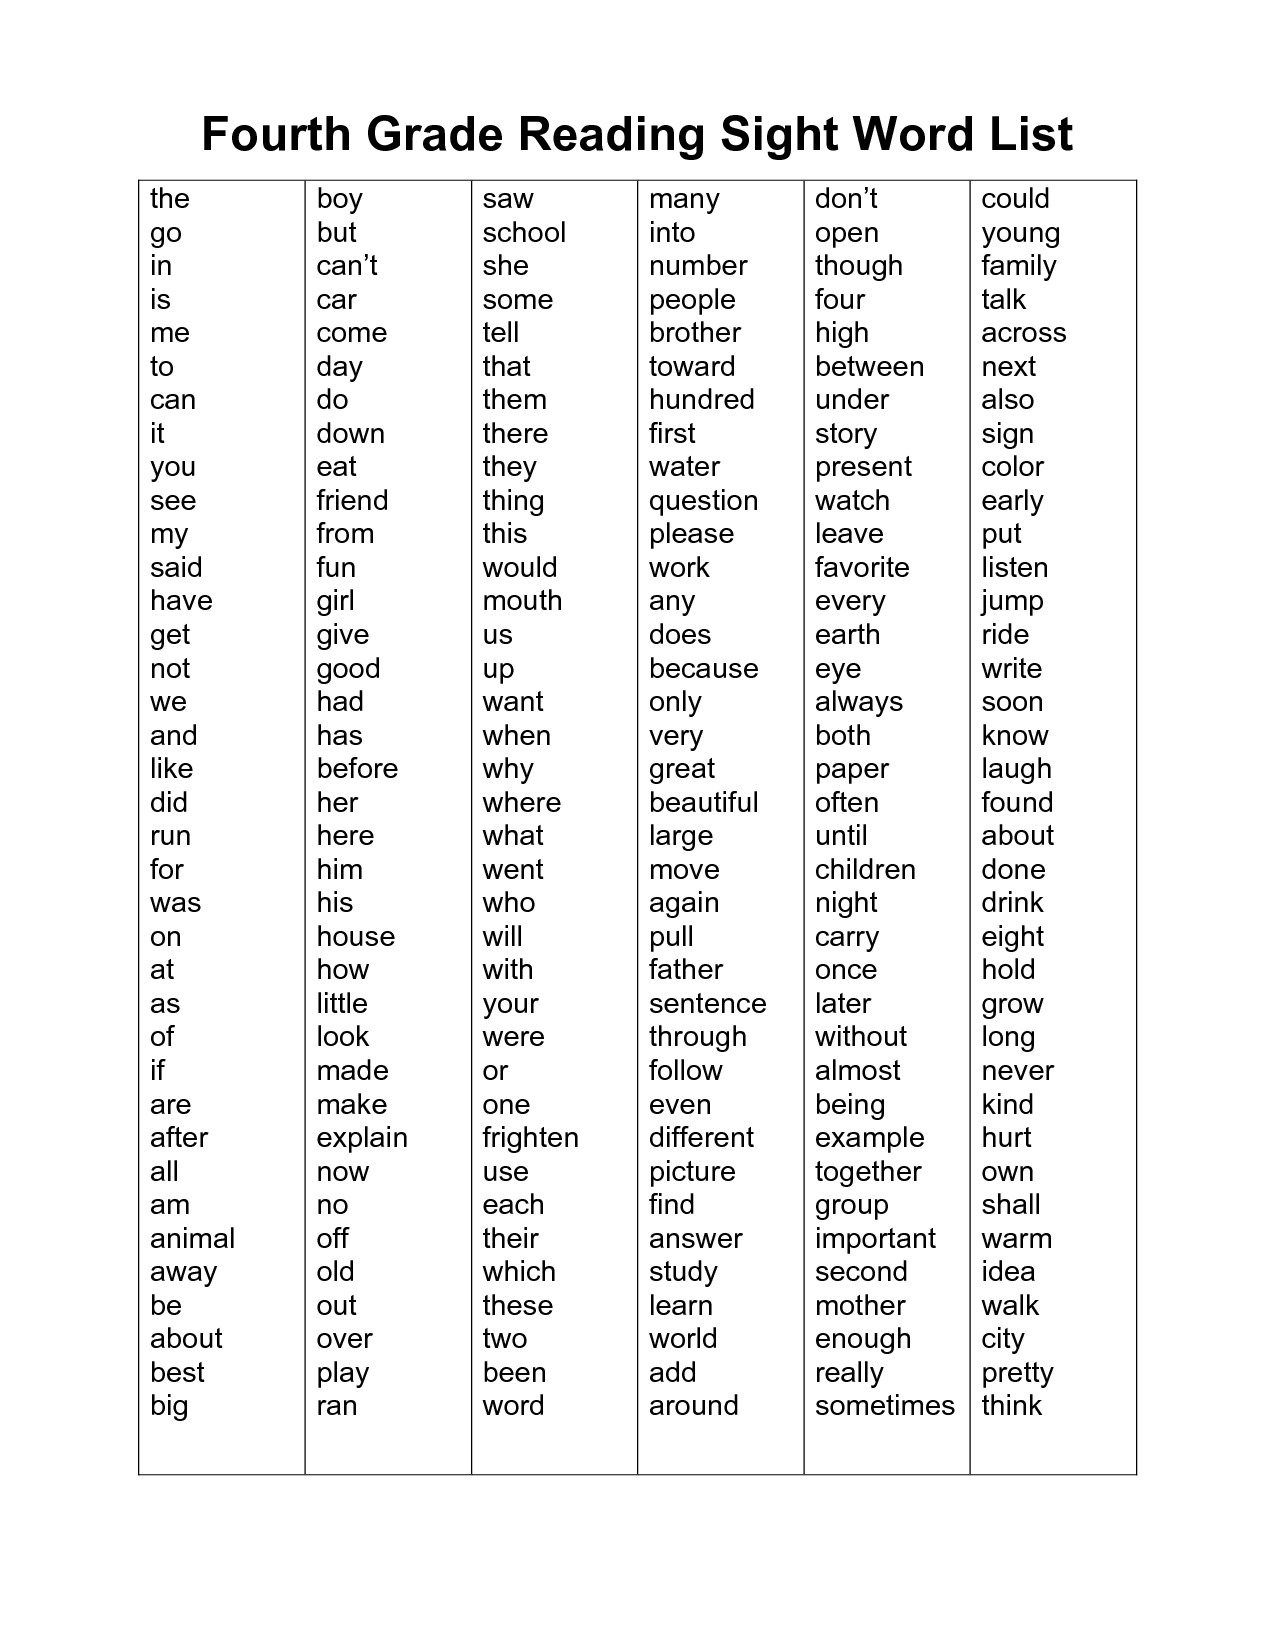 Third Grade Reading Sight Word List Image